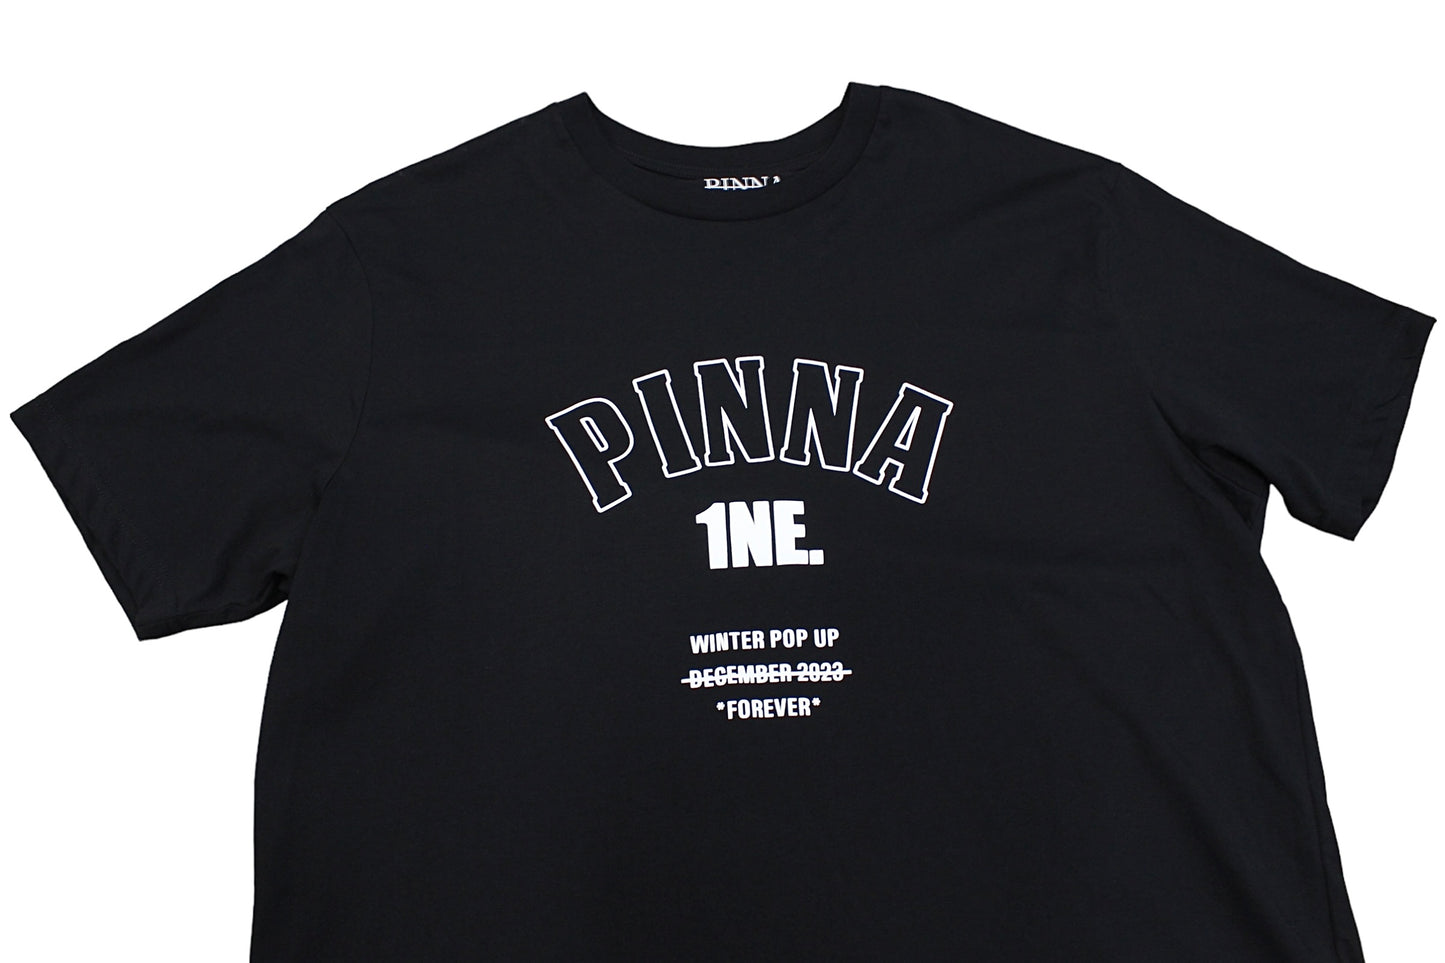 Pinna x 1NE Winter Pop Up Black T-Shirt